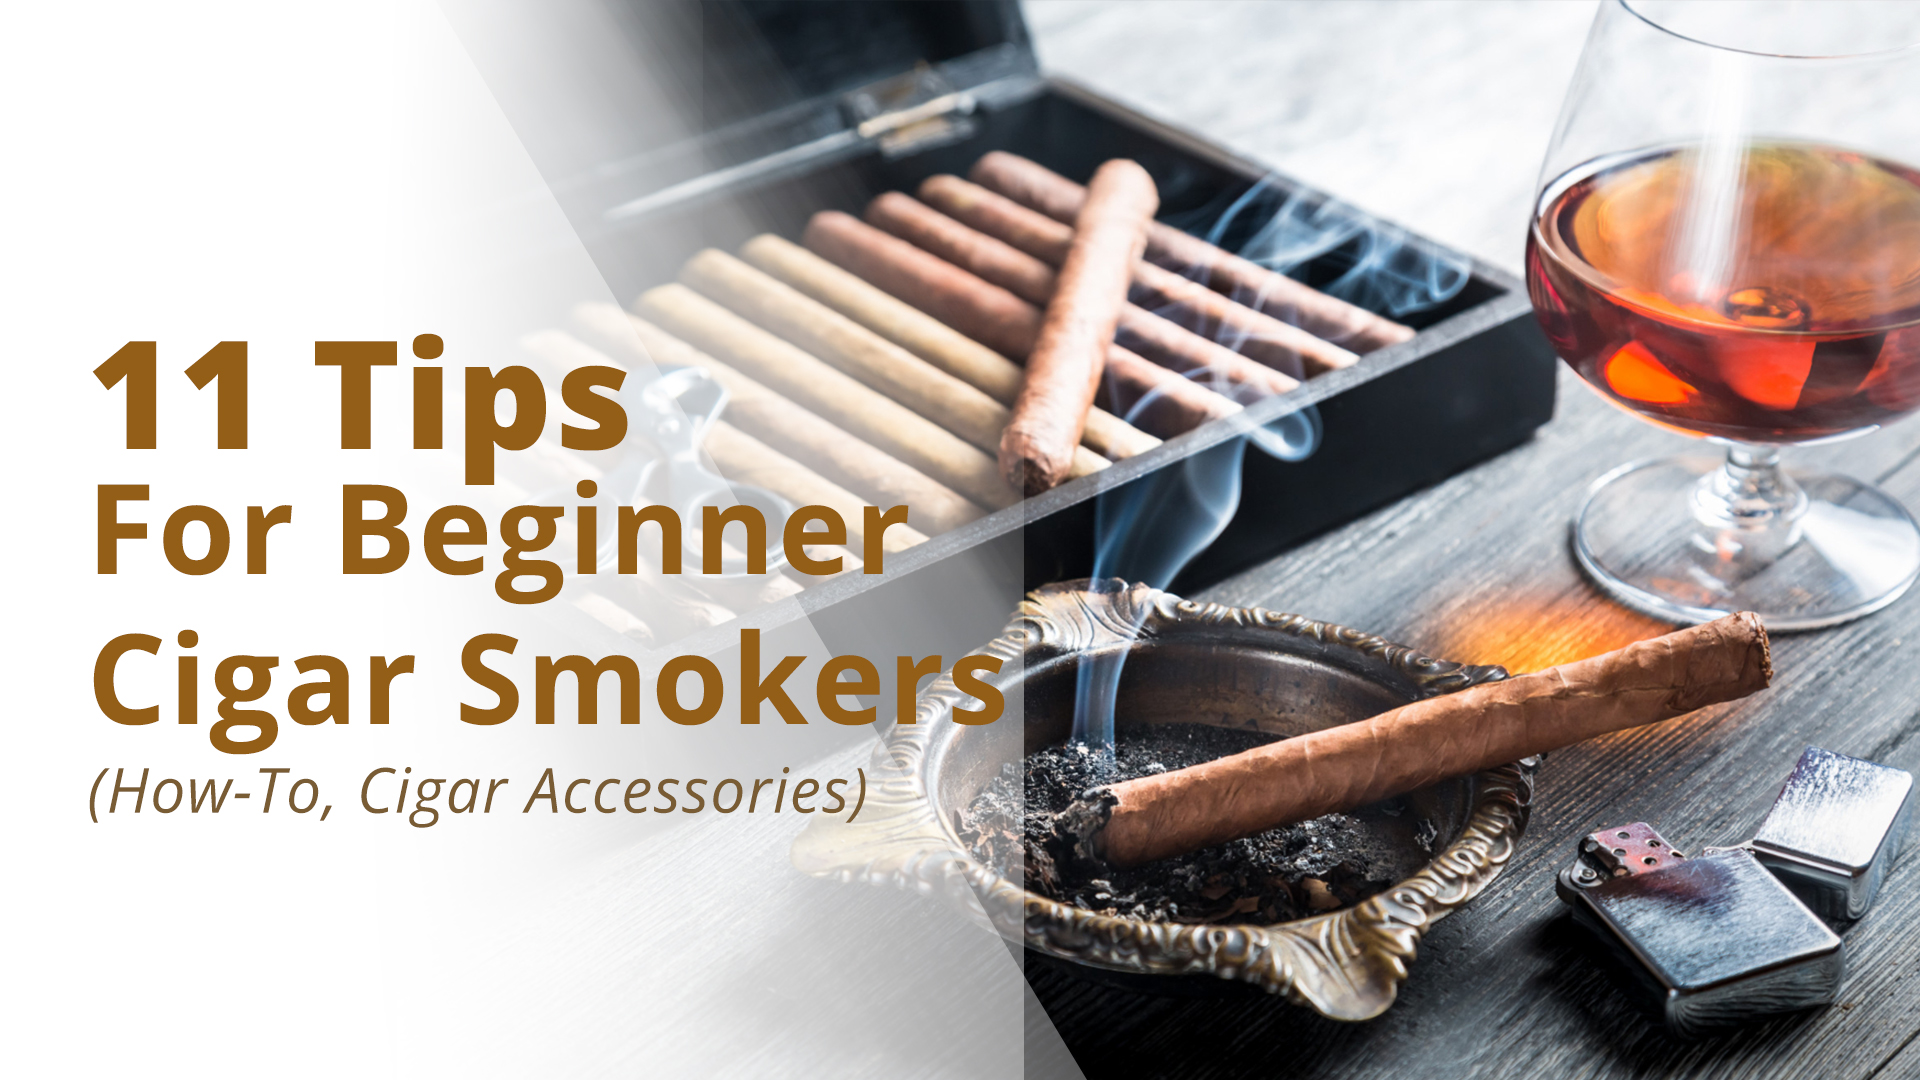 Tips for beginner cigar smokers